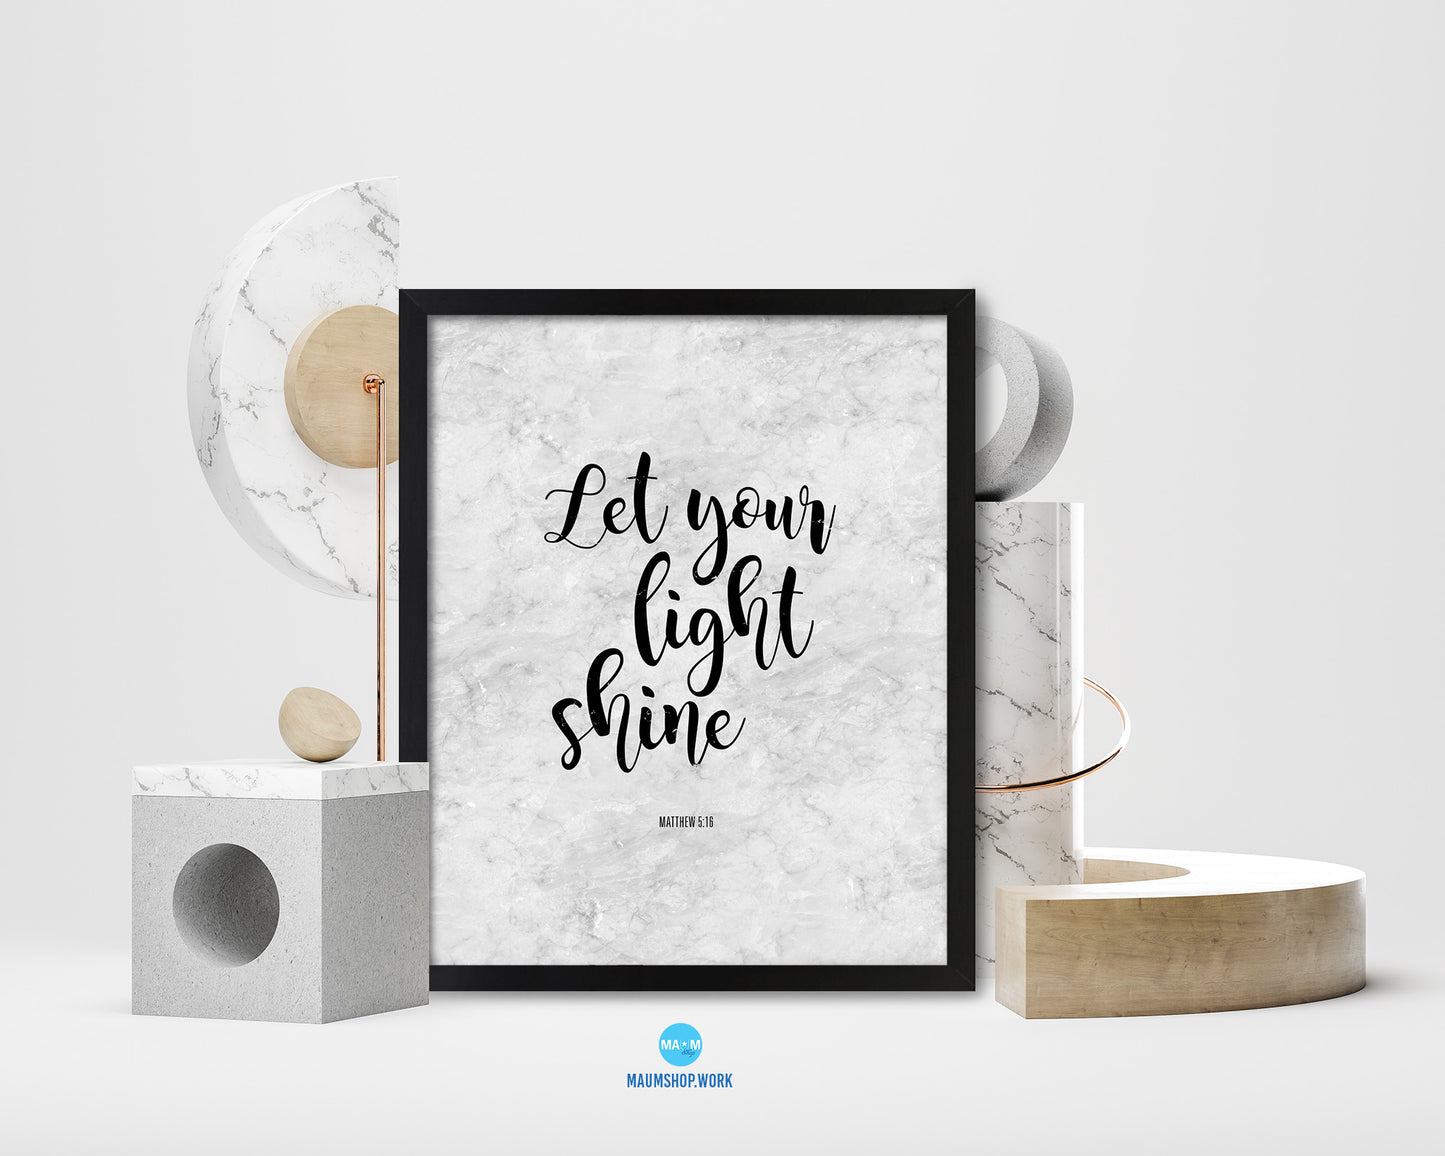 Let your light shine, Matthew 5:16 Bible Scripture Verse Framed Print Wall Art Decor Gifts